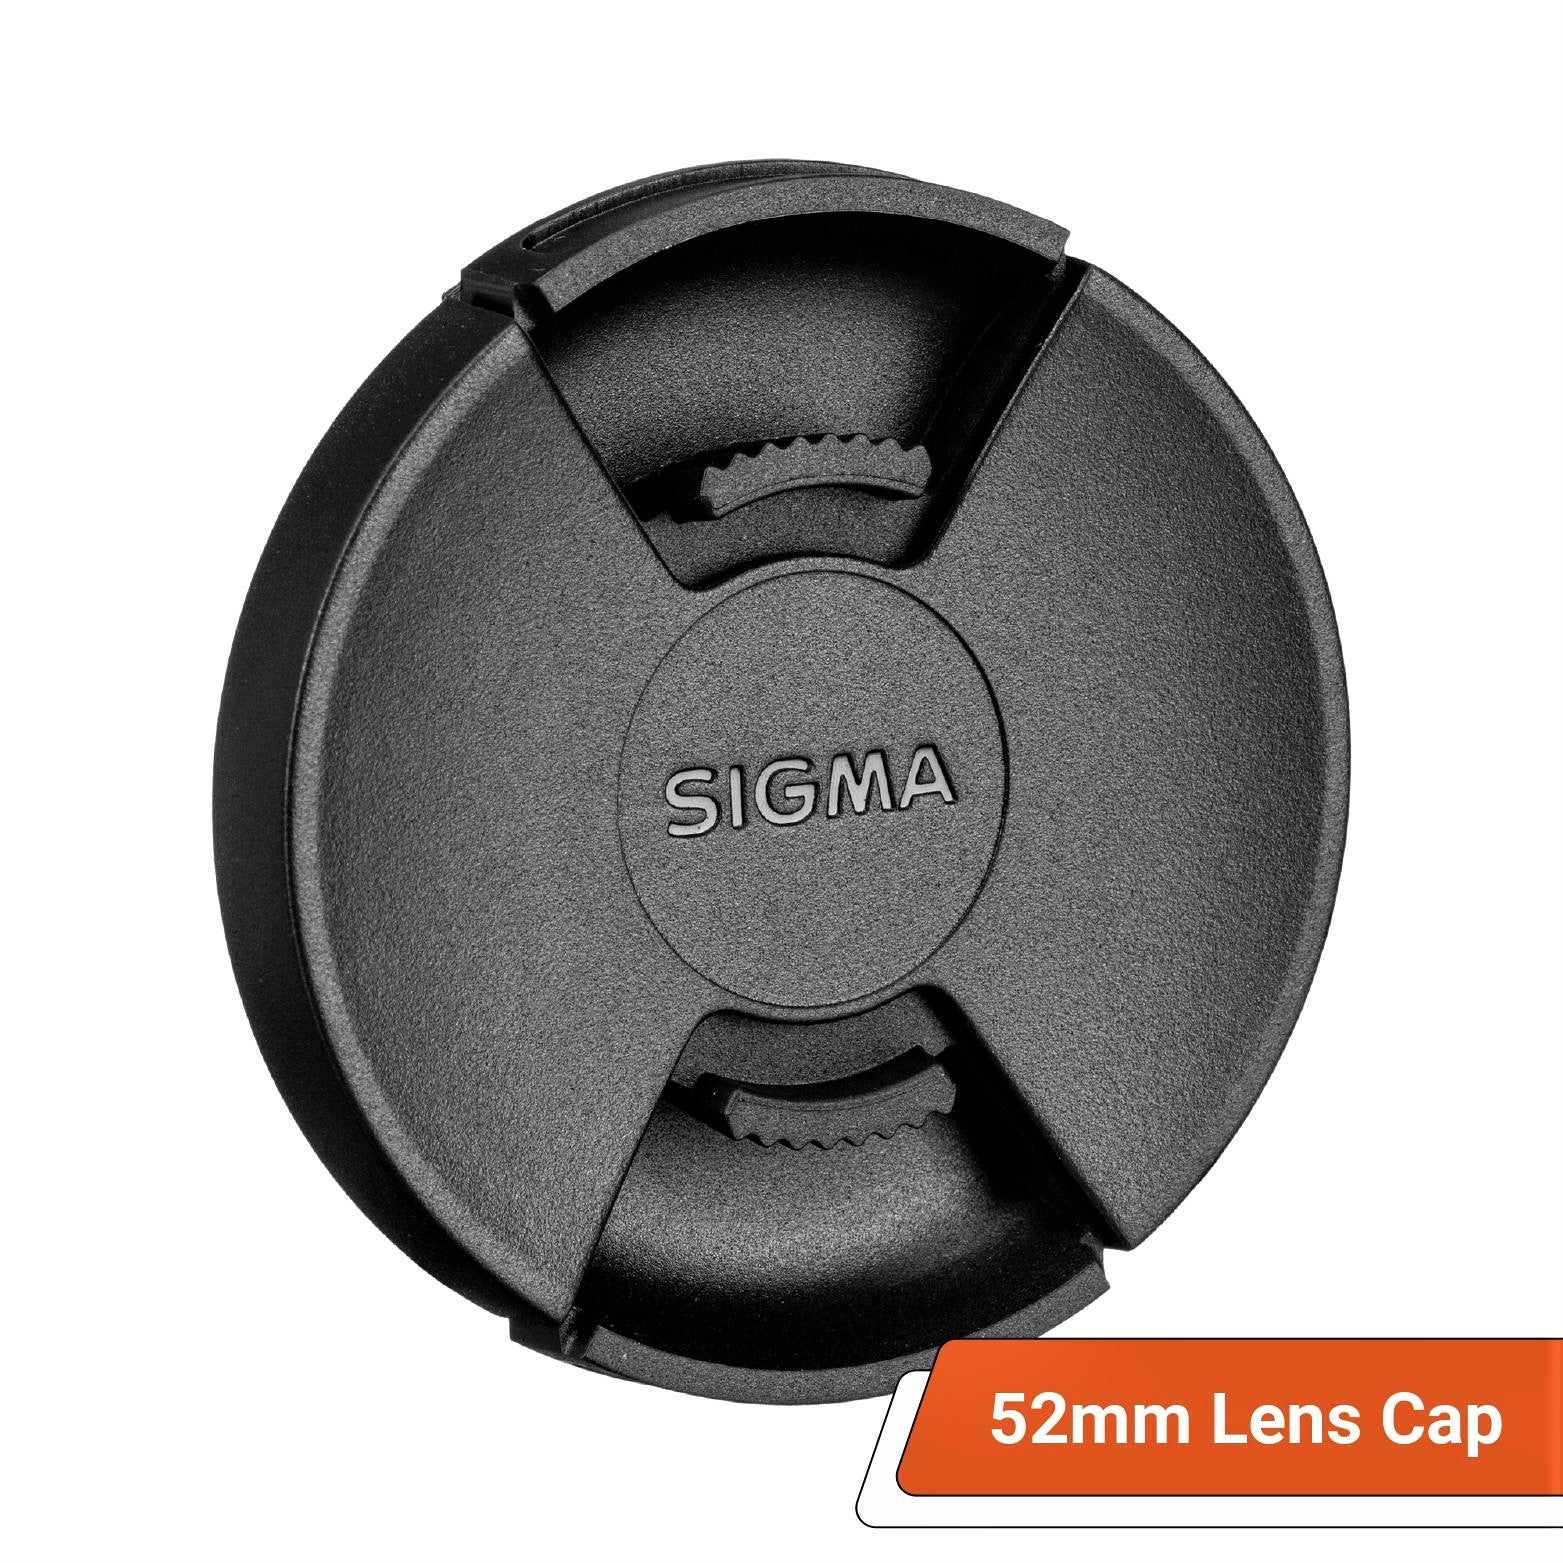 Sigma LCF-52 III 52mm Lens Cap